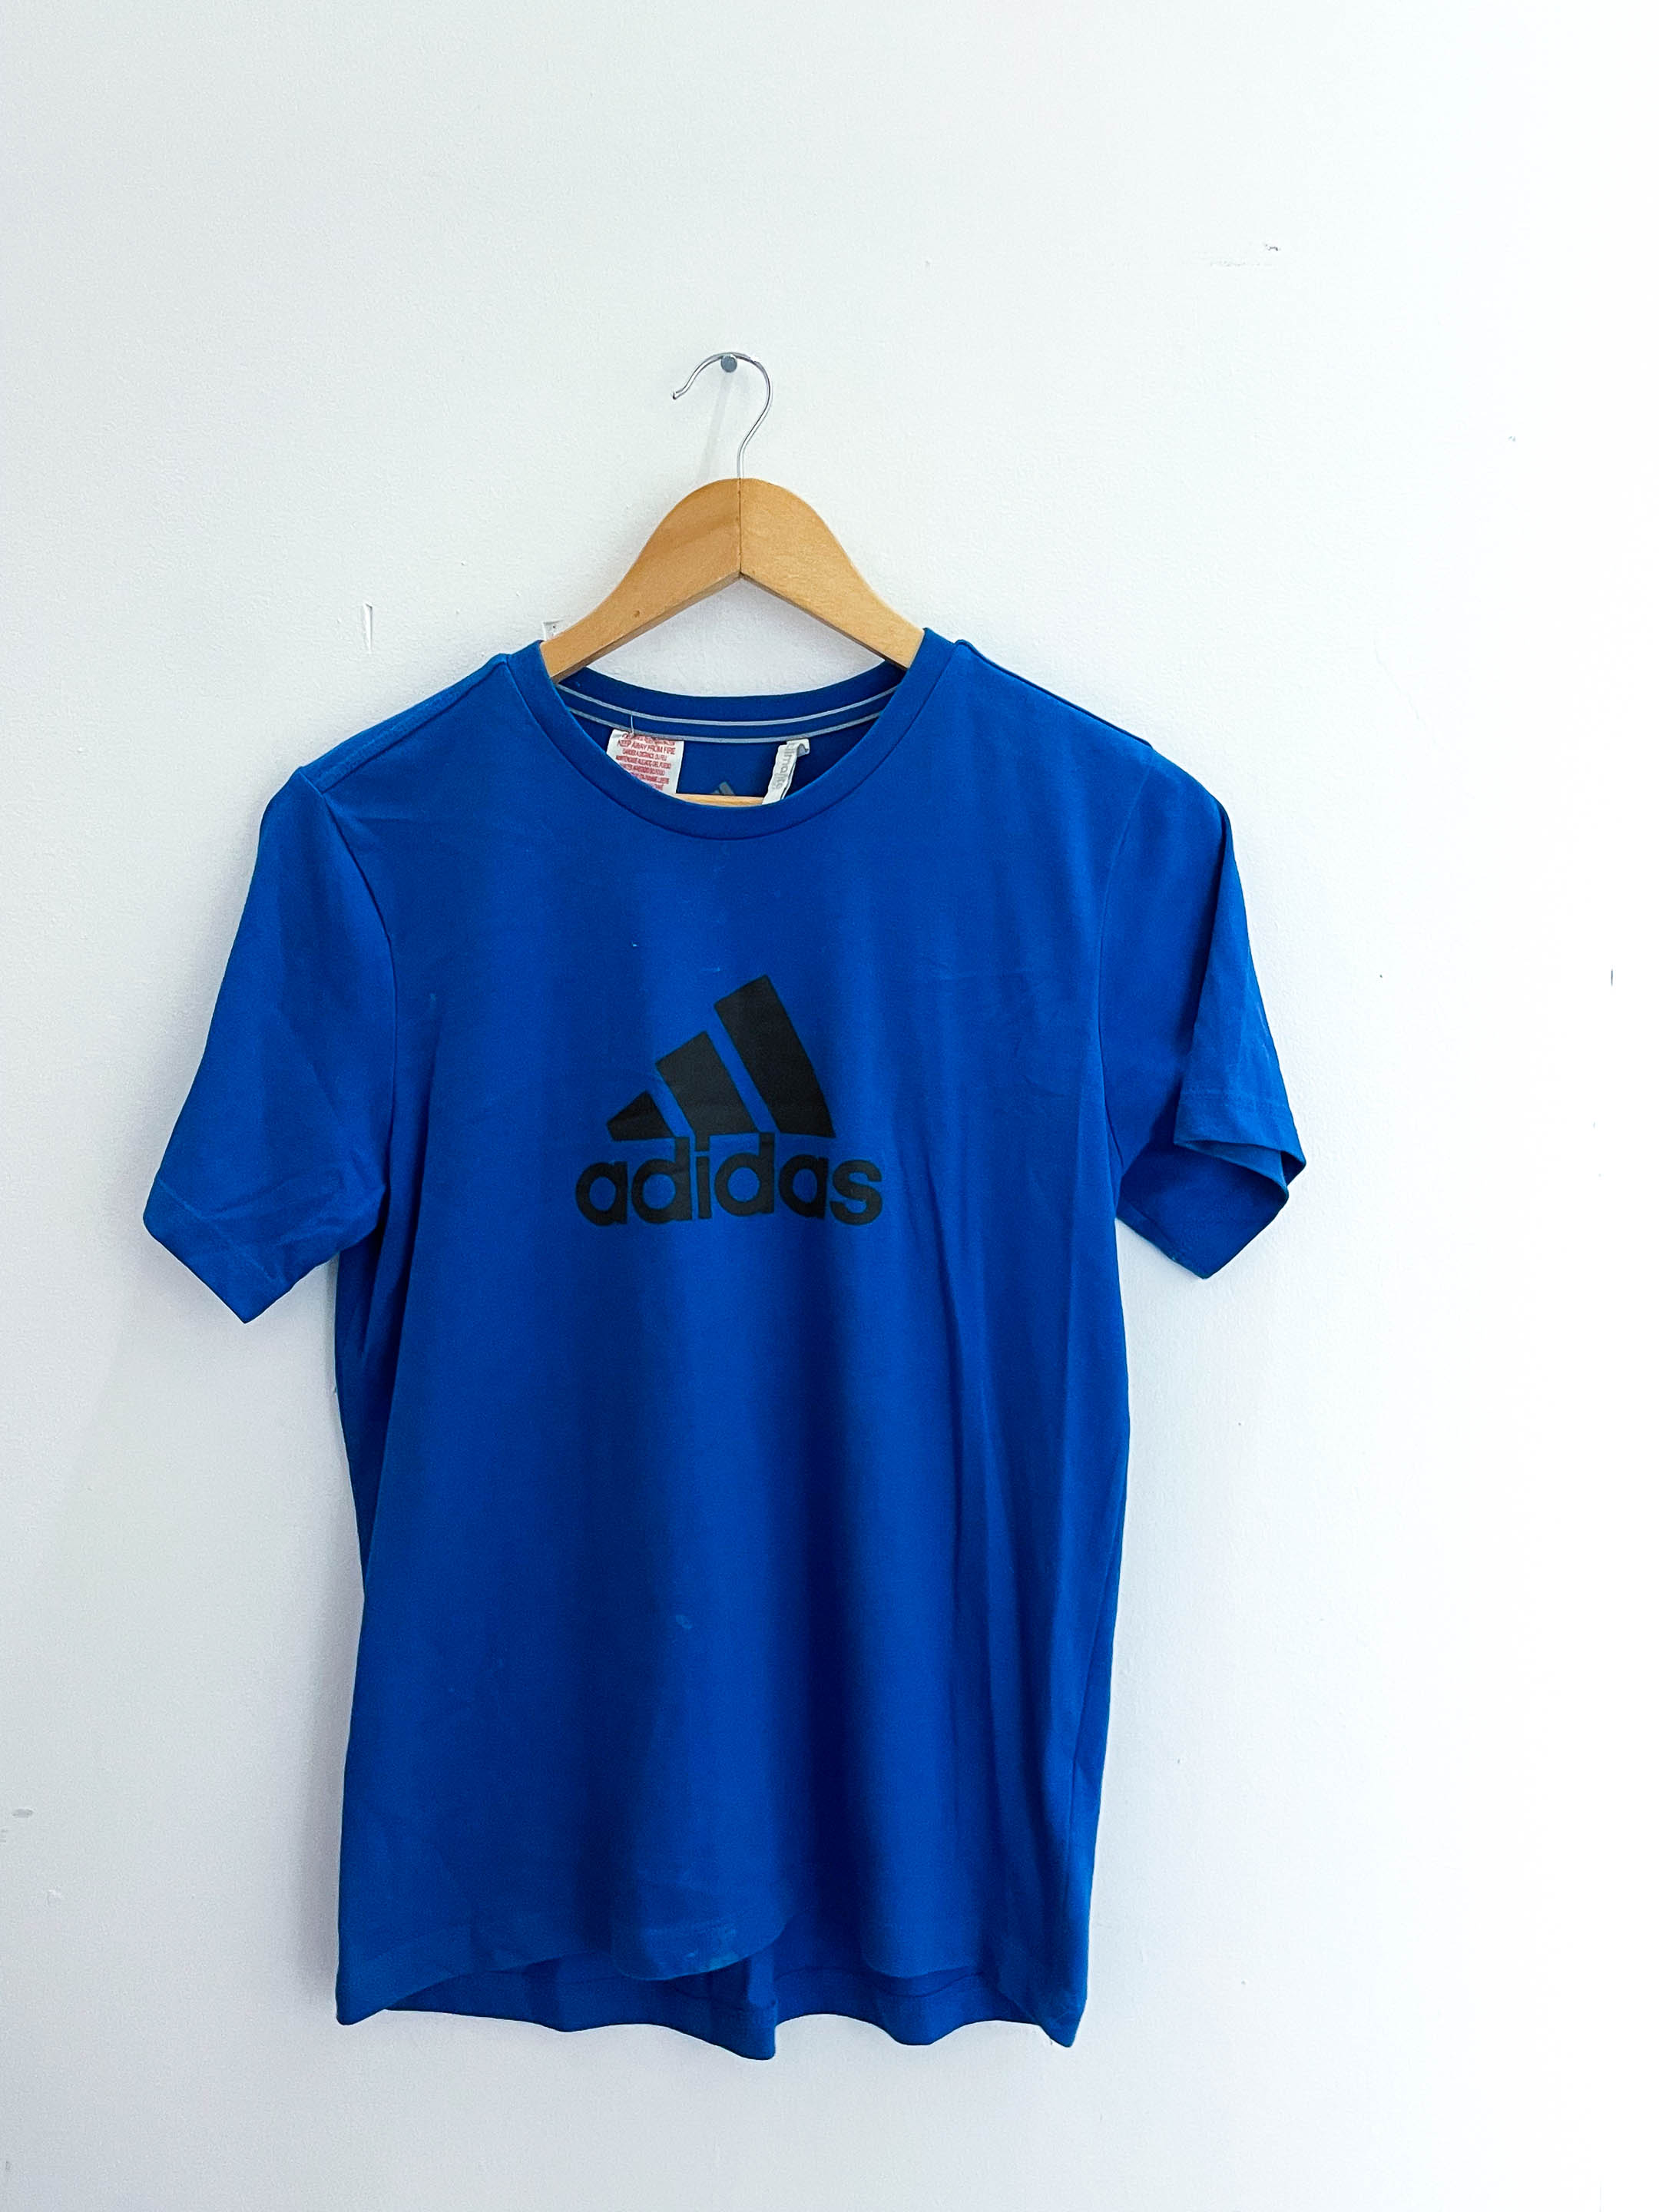 Vintage Adidas climate cotton blue large tshirt